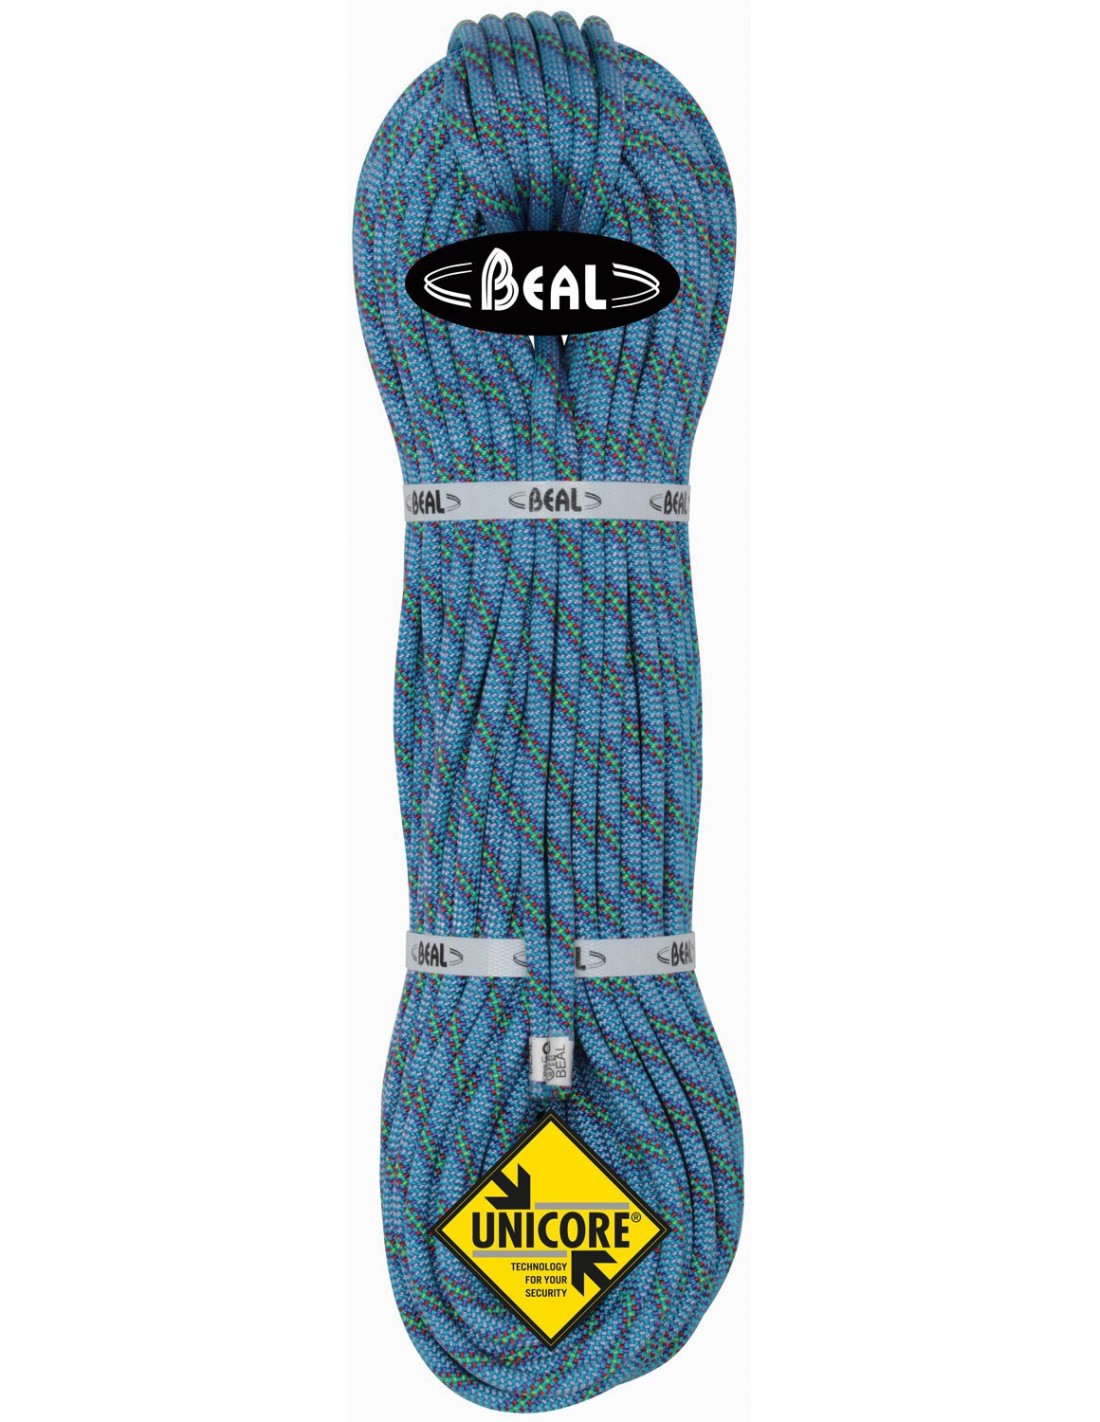 Beal Kletterseil 8,6 Cobra II Unicore - Dry Cover, blue, 50 m Seildurchmesser - 8.6 - 9.0 mm, Seilfarbe - Blau, Seillänge - 50 m, Seilvariante - Halbseil, von Beal